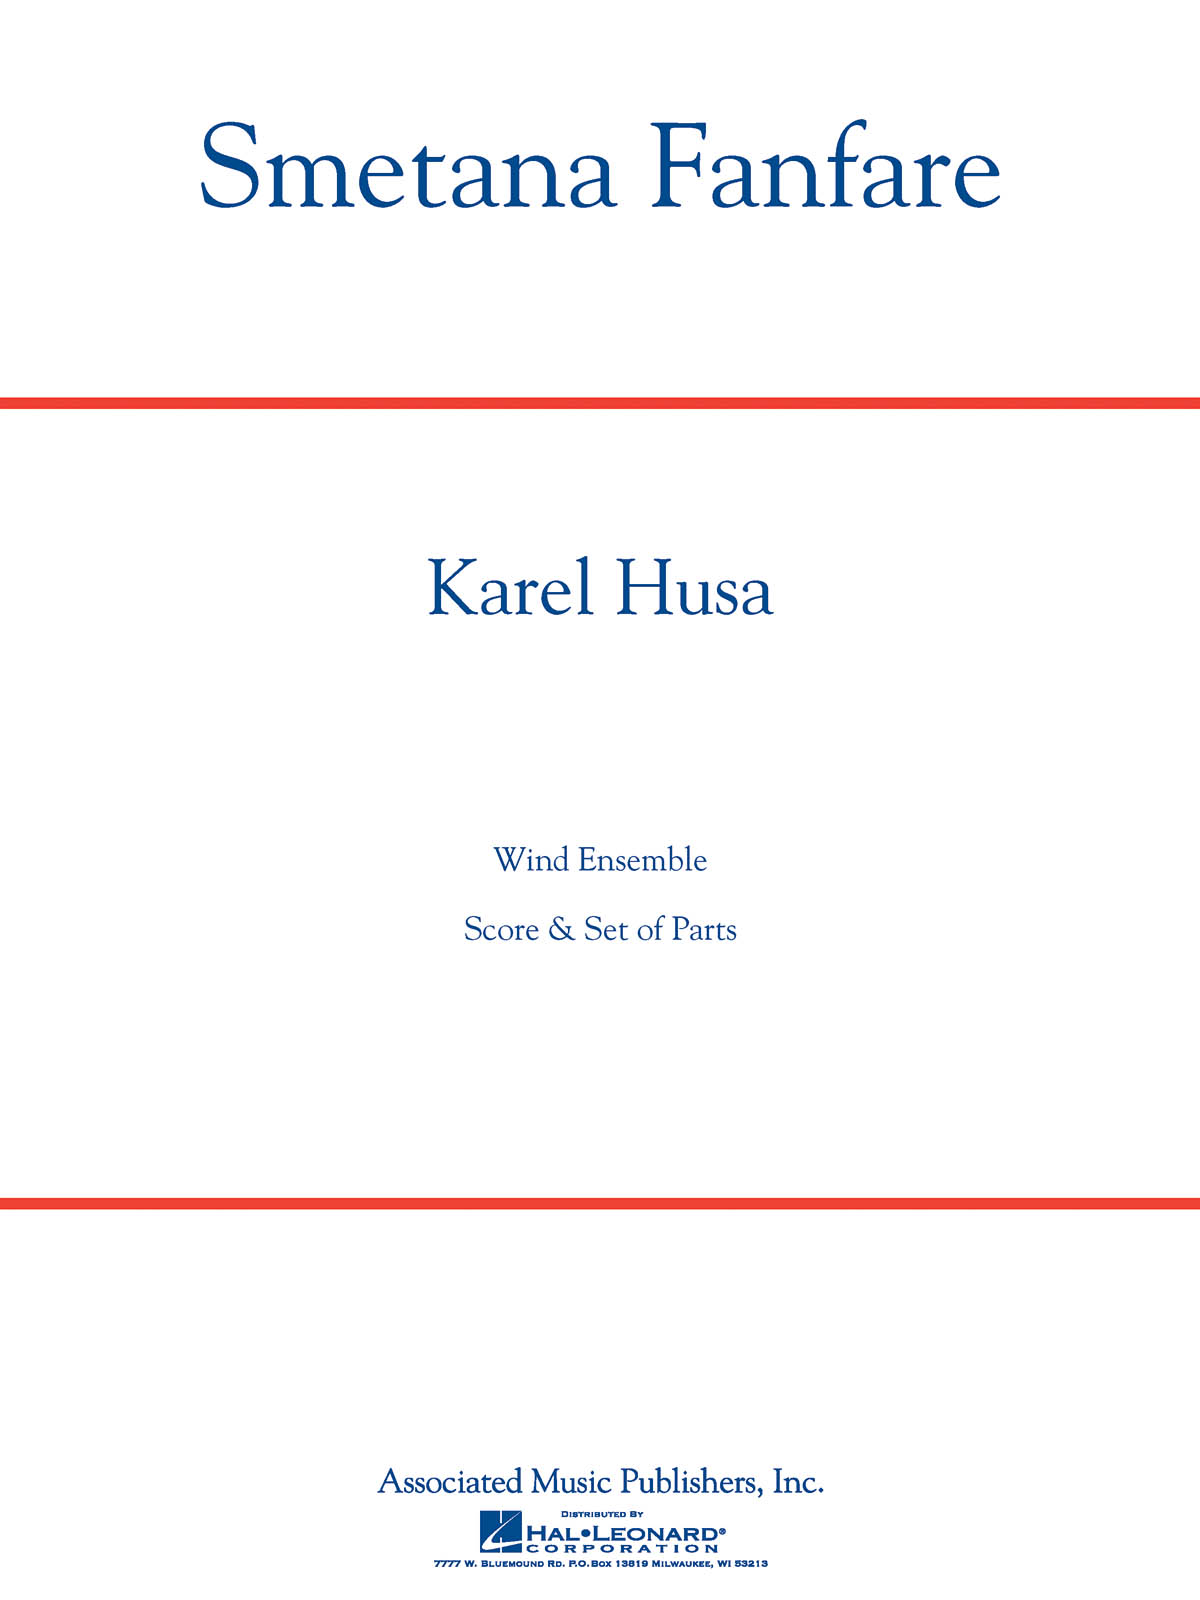 Karel Husa: Smetana Fanfare